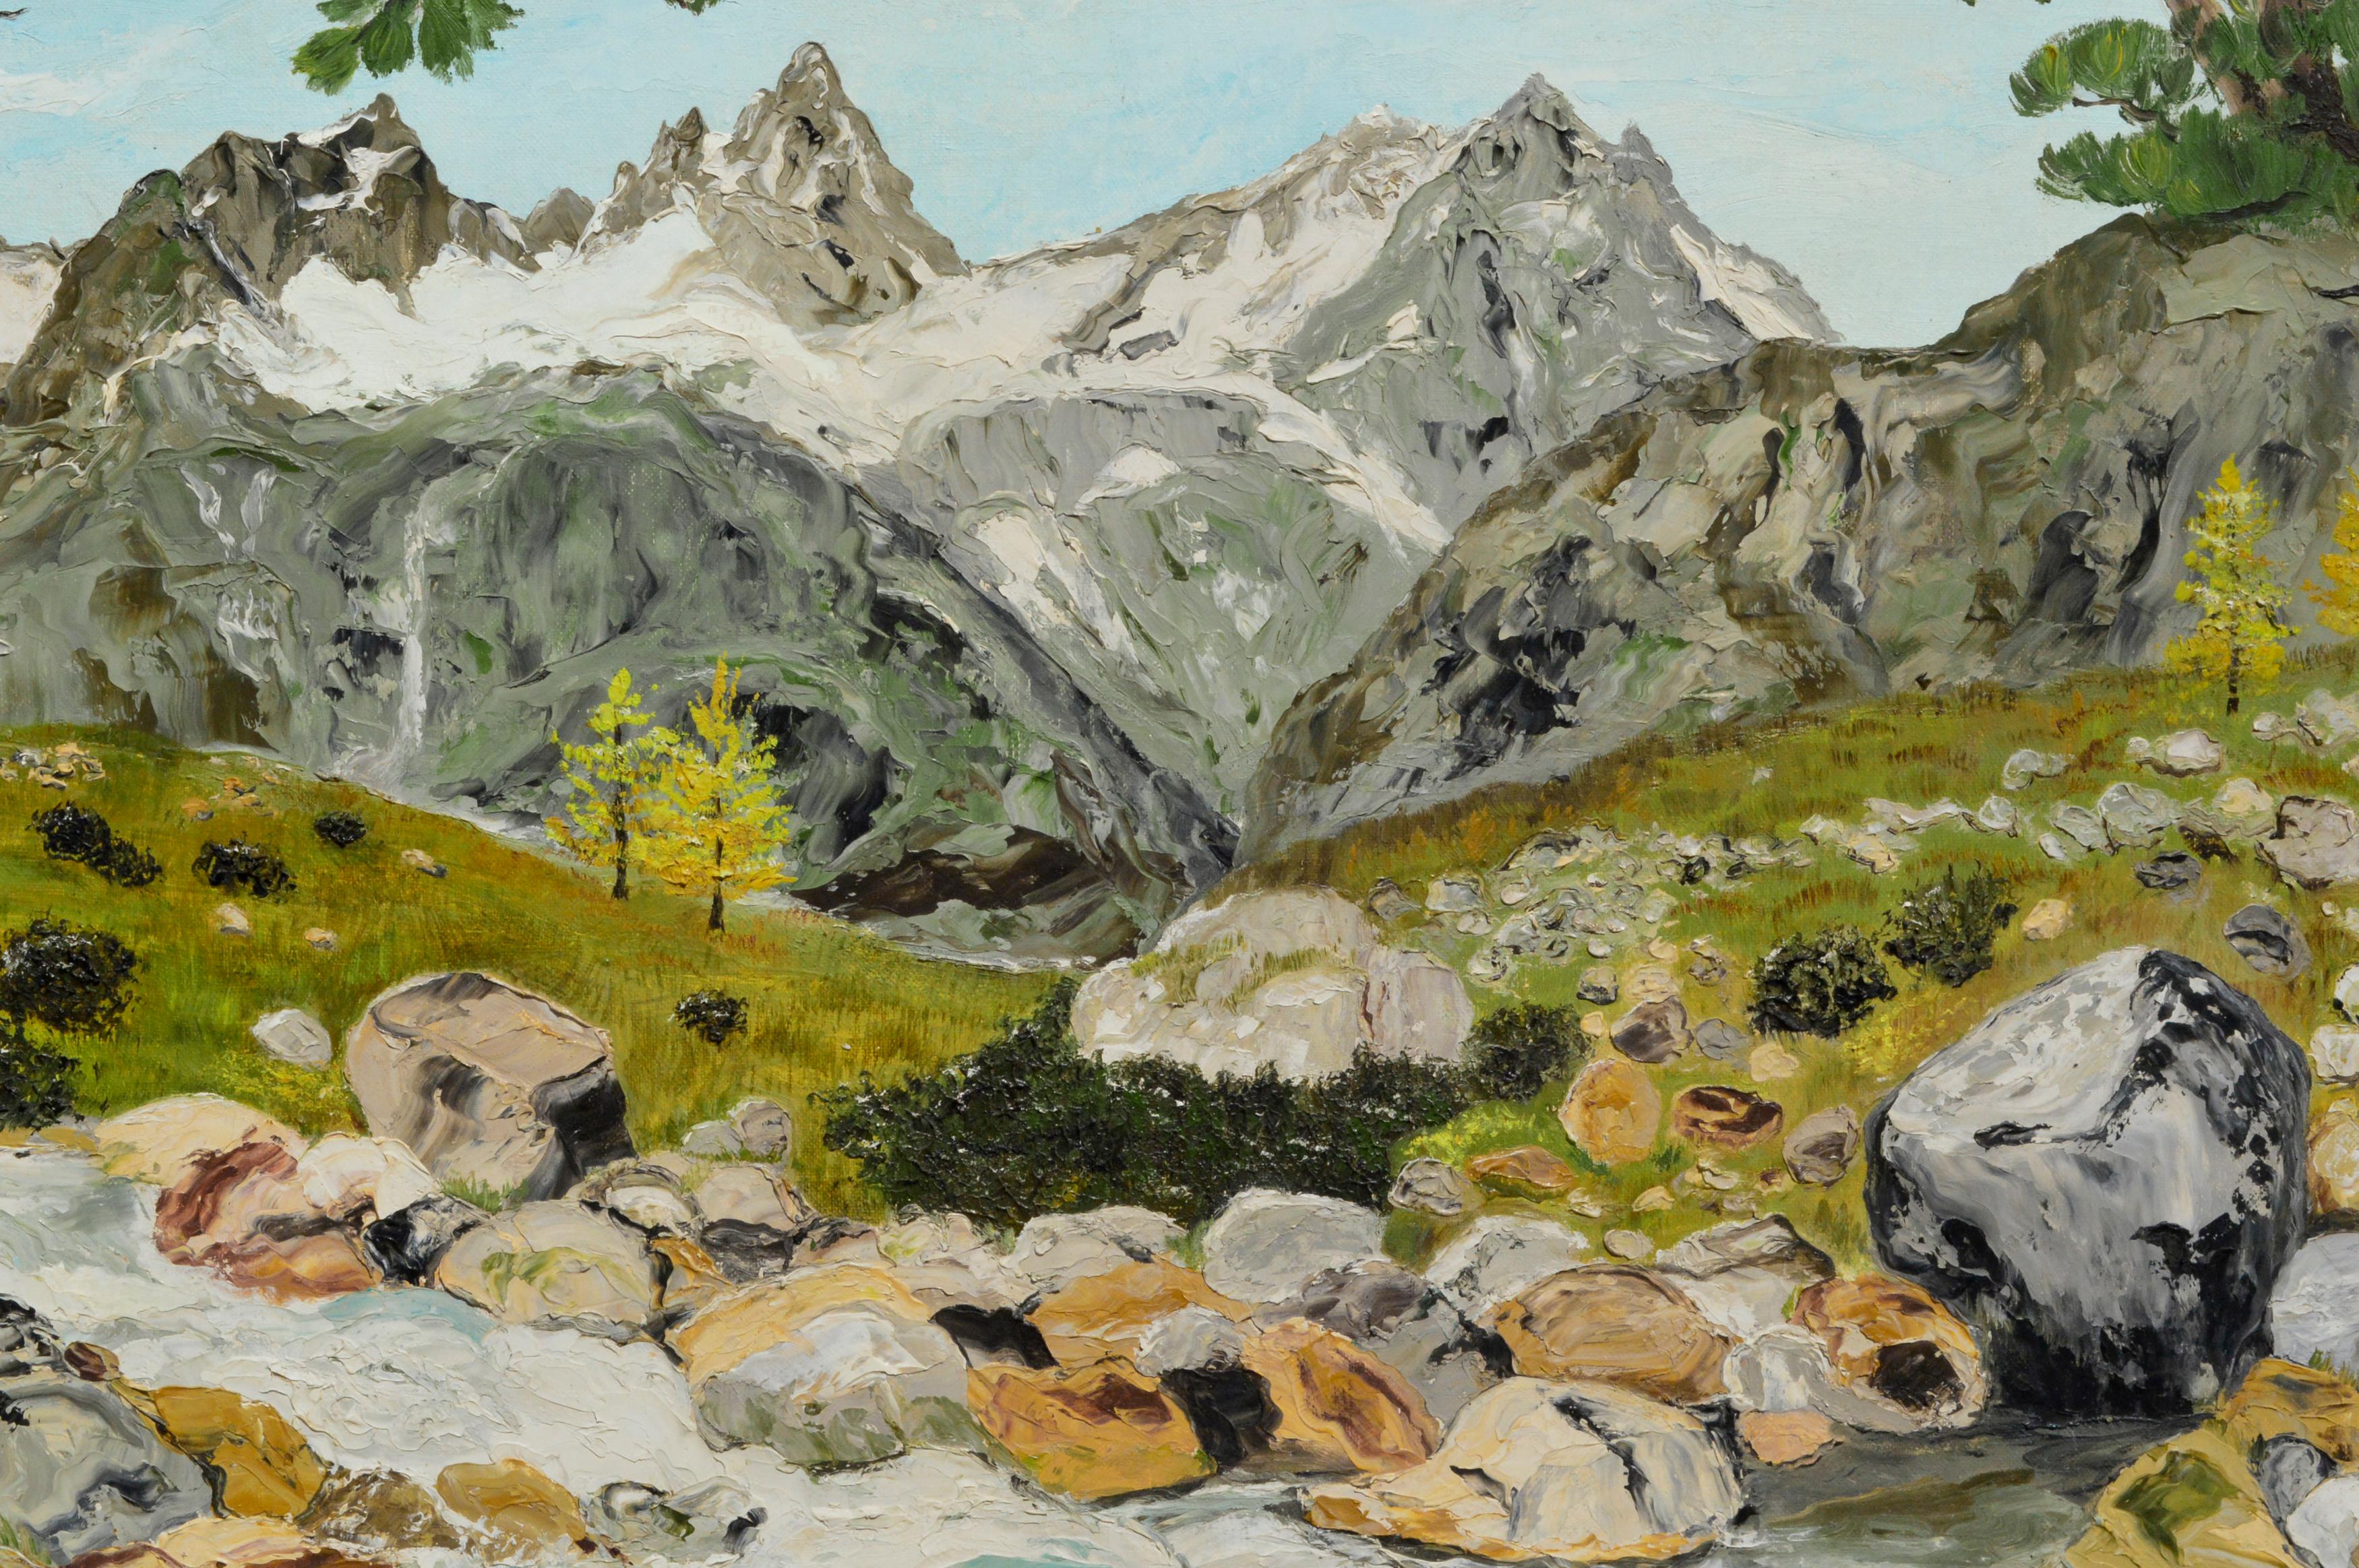 Desolation Wilderness, Sierra Mountains - Painting by Jeanelle L. Scott